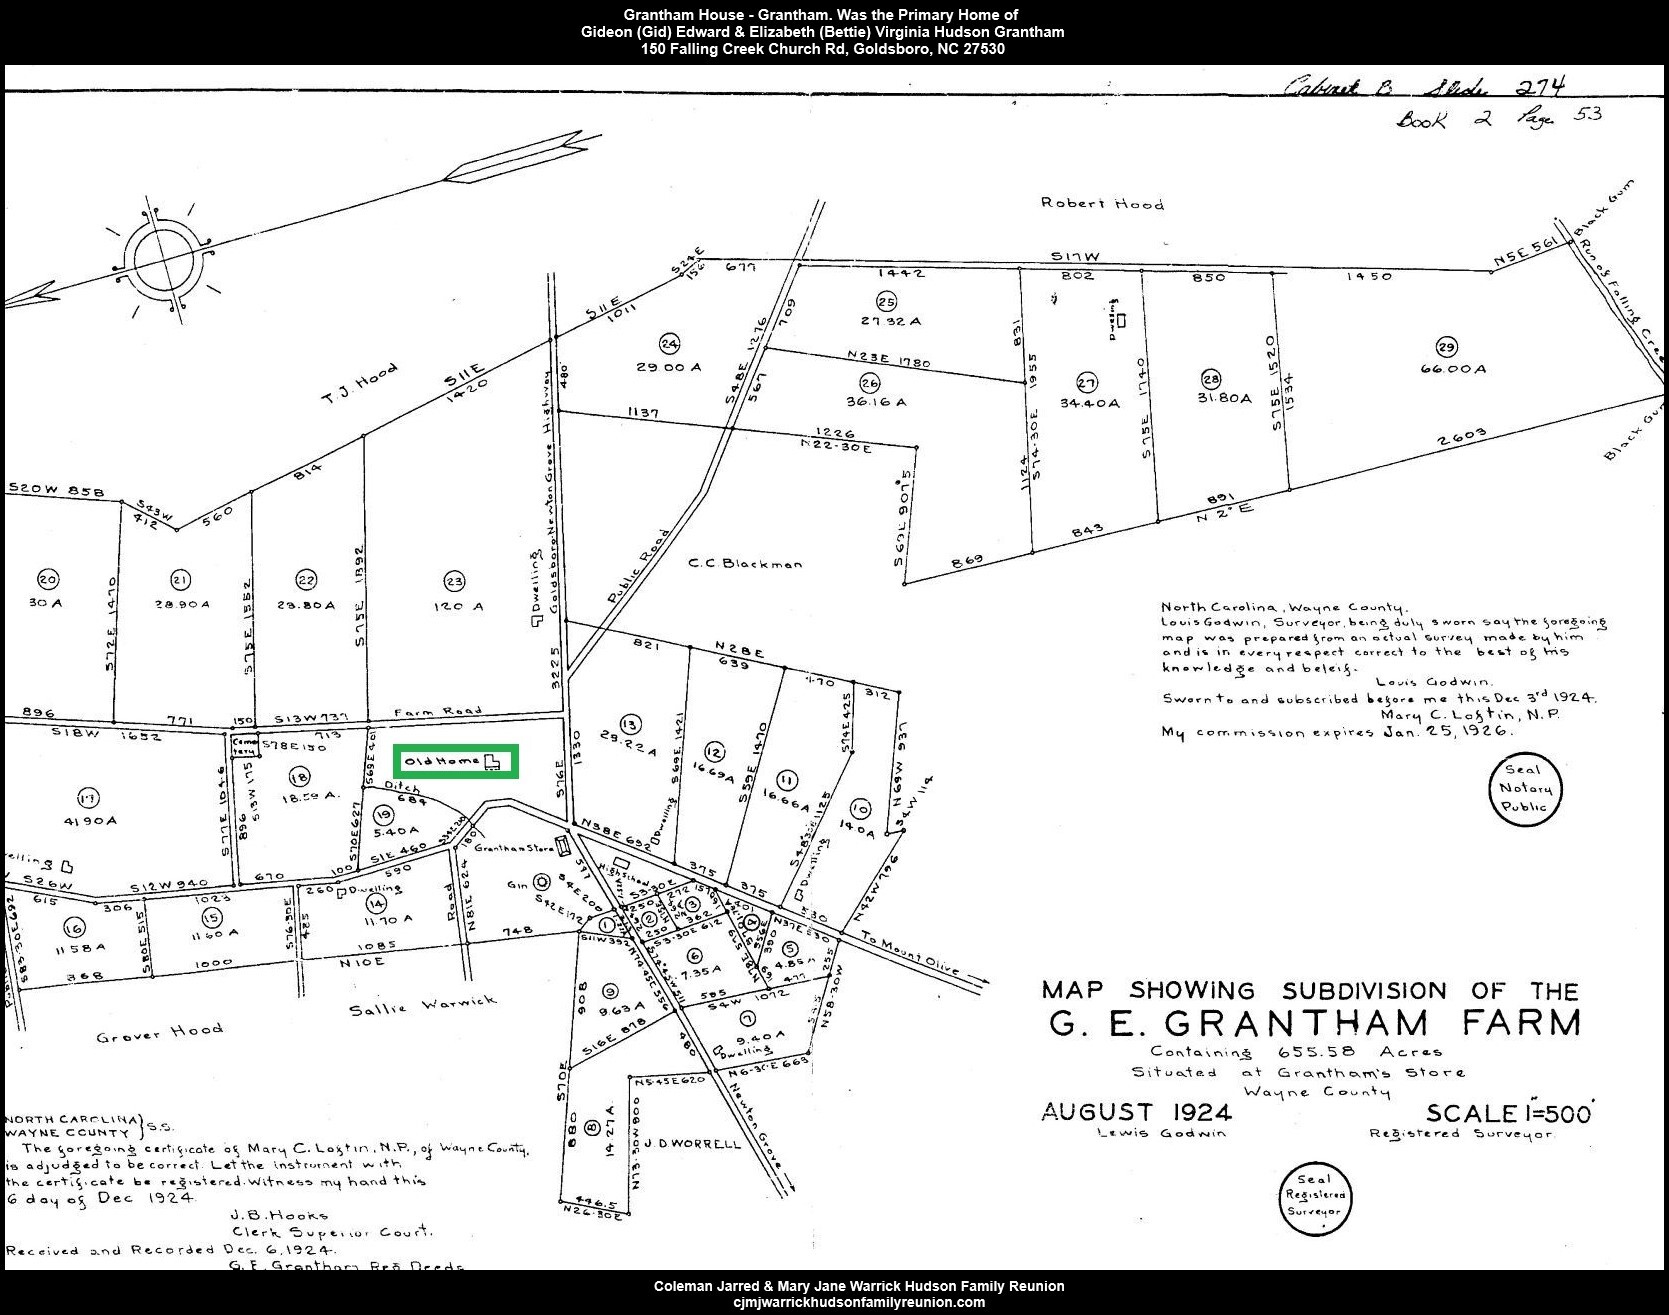 G. E. Grantham 1924 Farm - Subdivision Map (original) (WM)